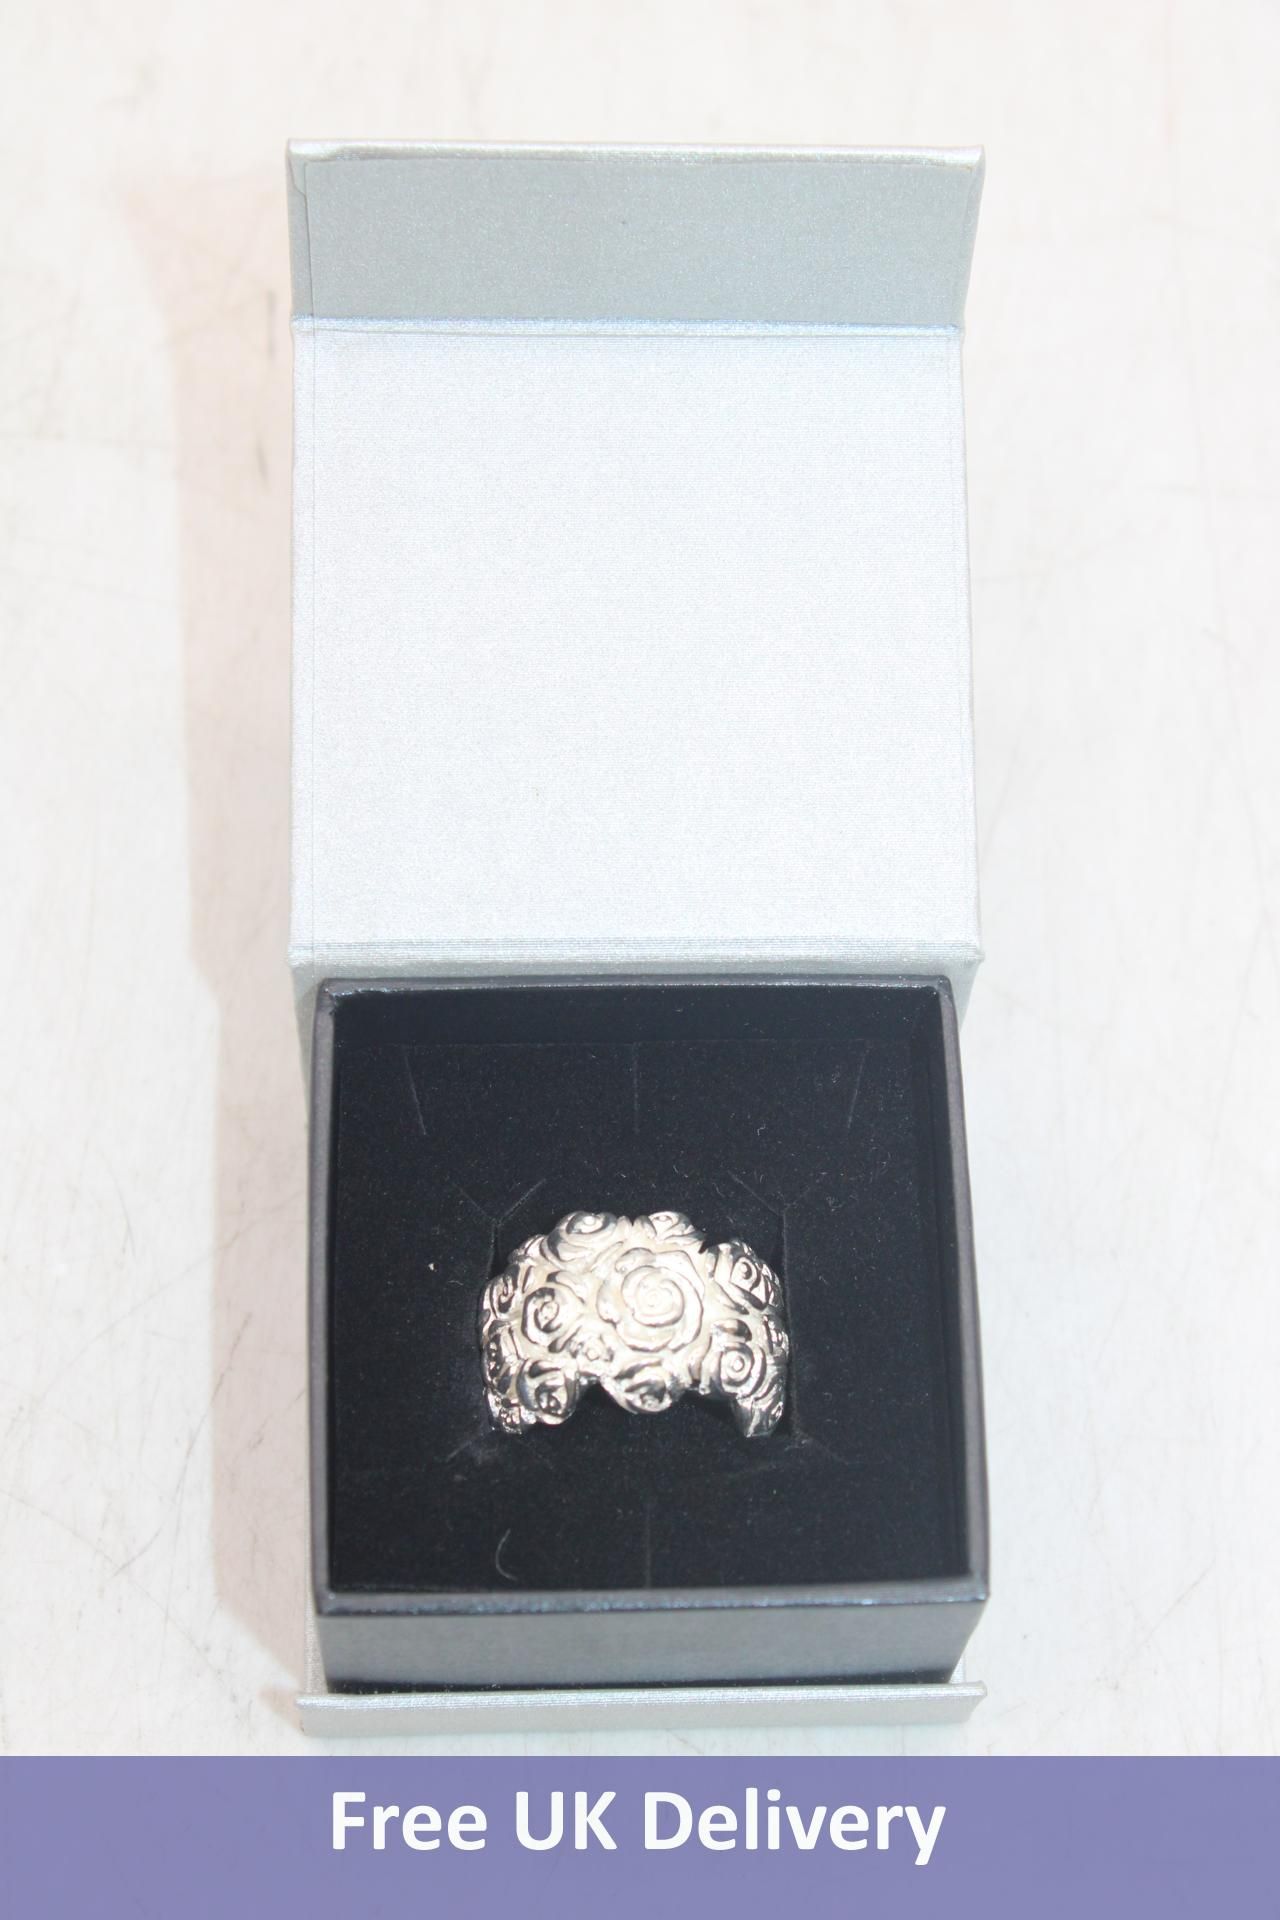 Frank Skielka Chunky Silver "Roses" Ring, 17mm Sterling Silver 925